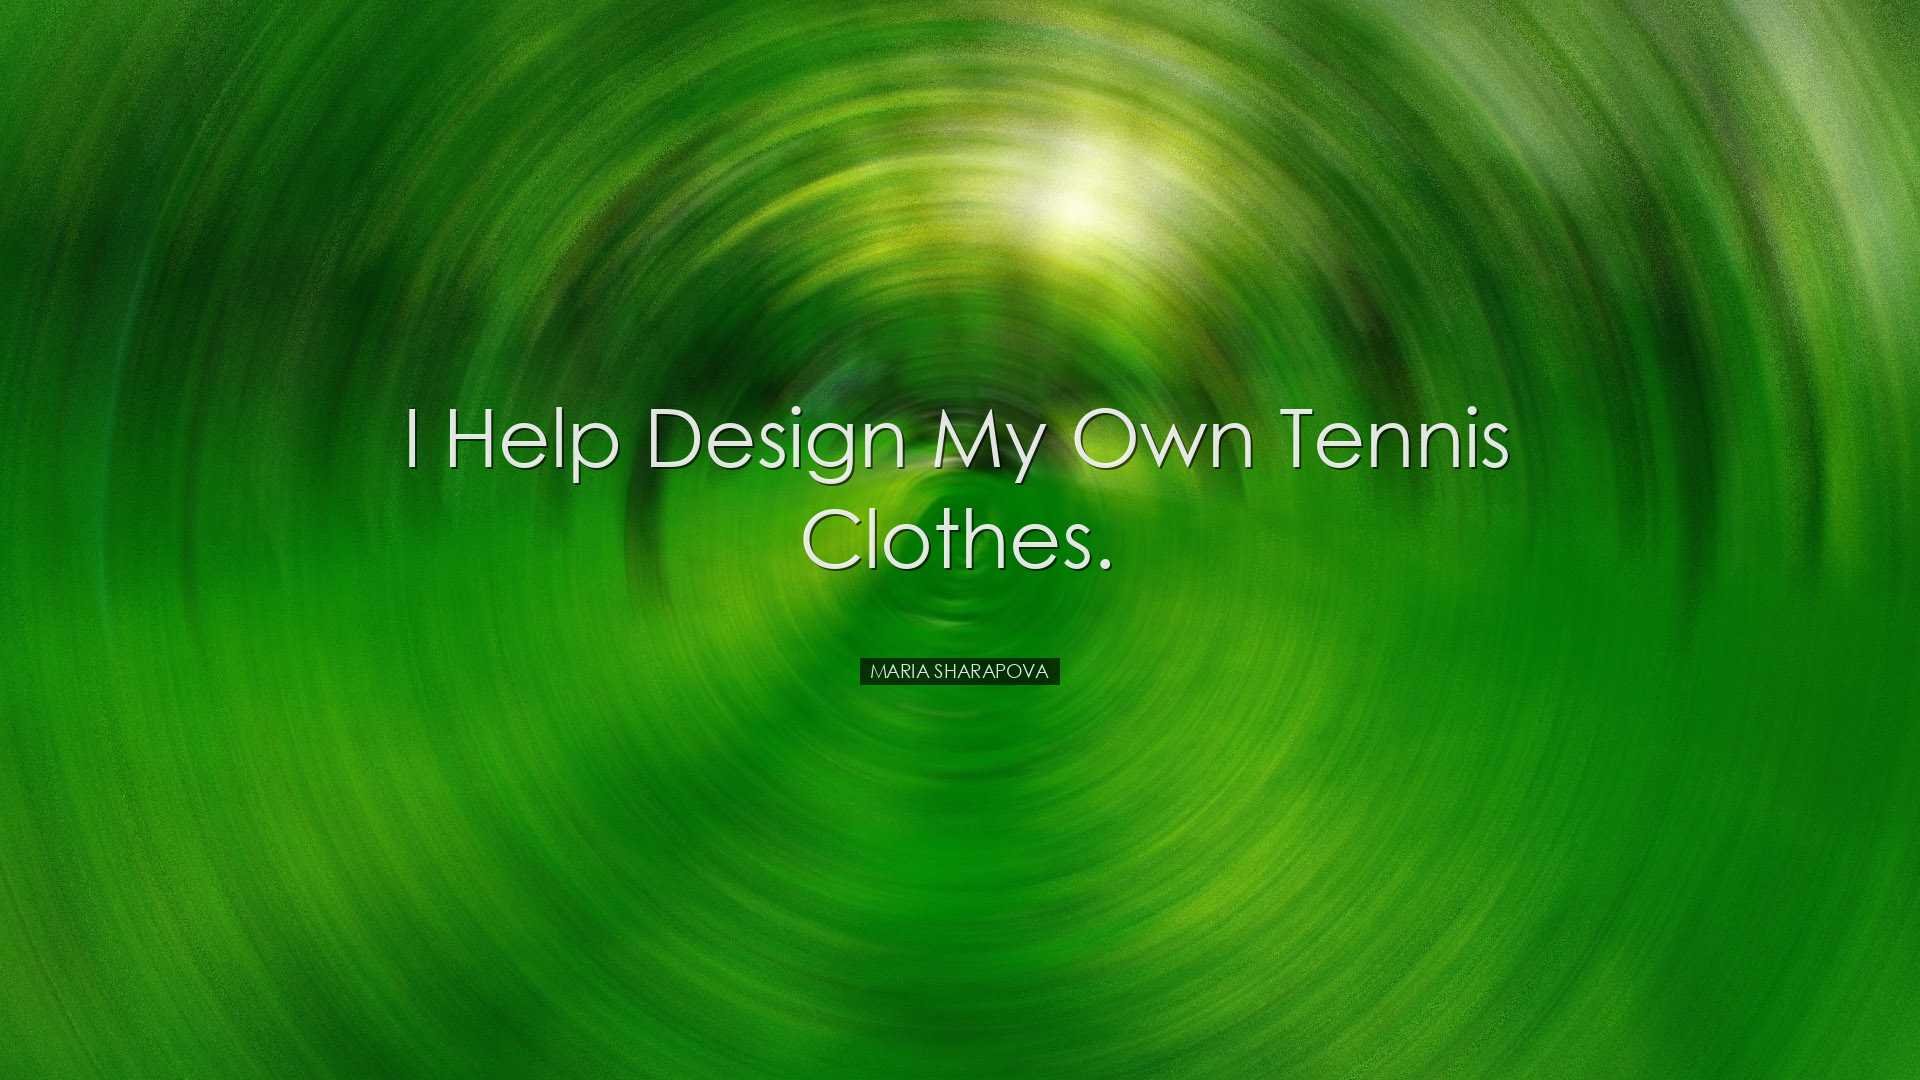 I help design my own tennis clothes. - Maria Sharapova